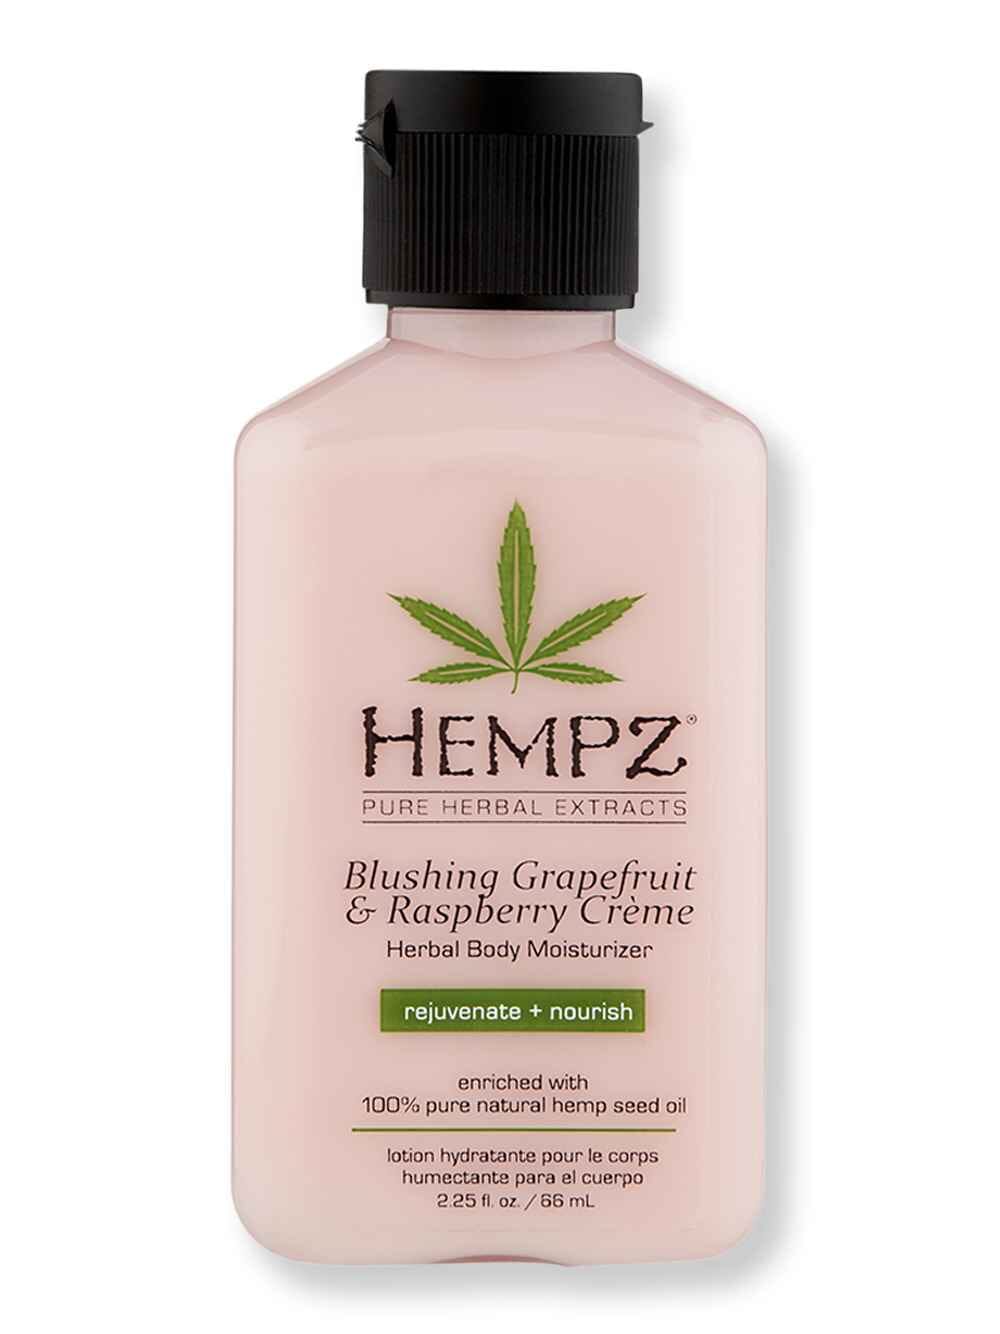 Hempz Hempz Blushing Grapefruit & Raspberry Creme Herbal Body Moisturizer 2.25 oz Body Lotions & Oils 